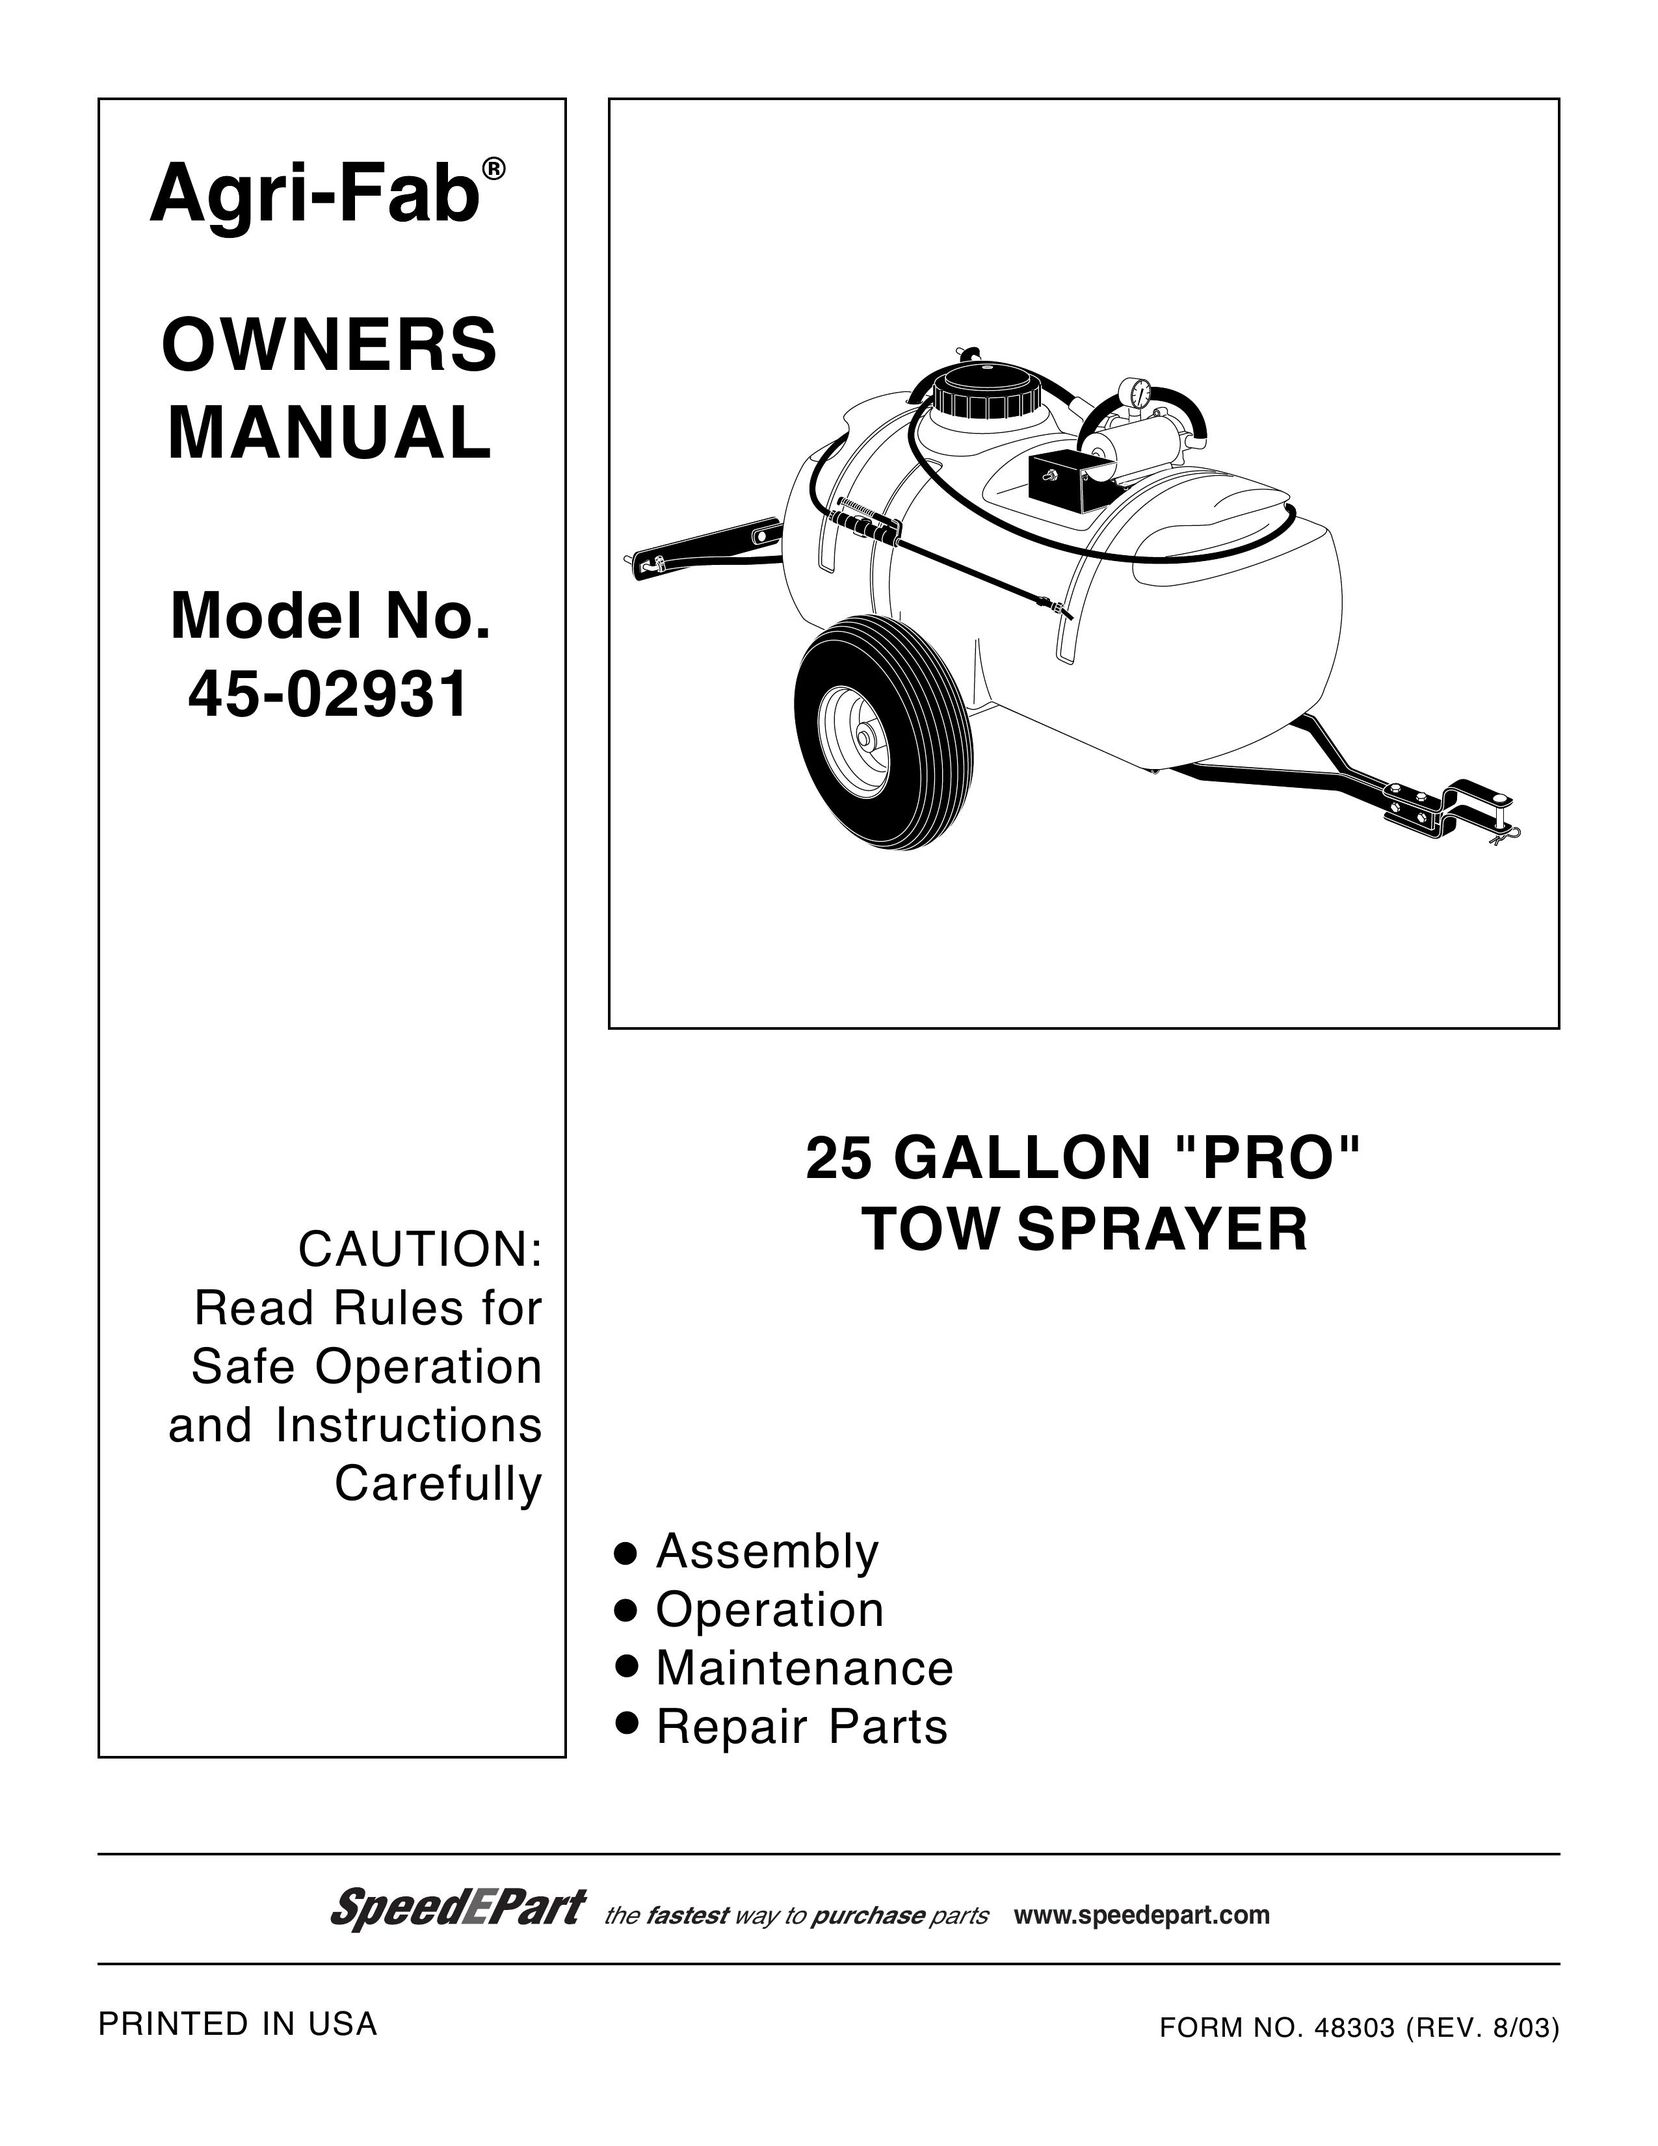 Agri-Fab 45-02931 Paint Sprayer User Manual